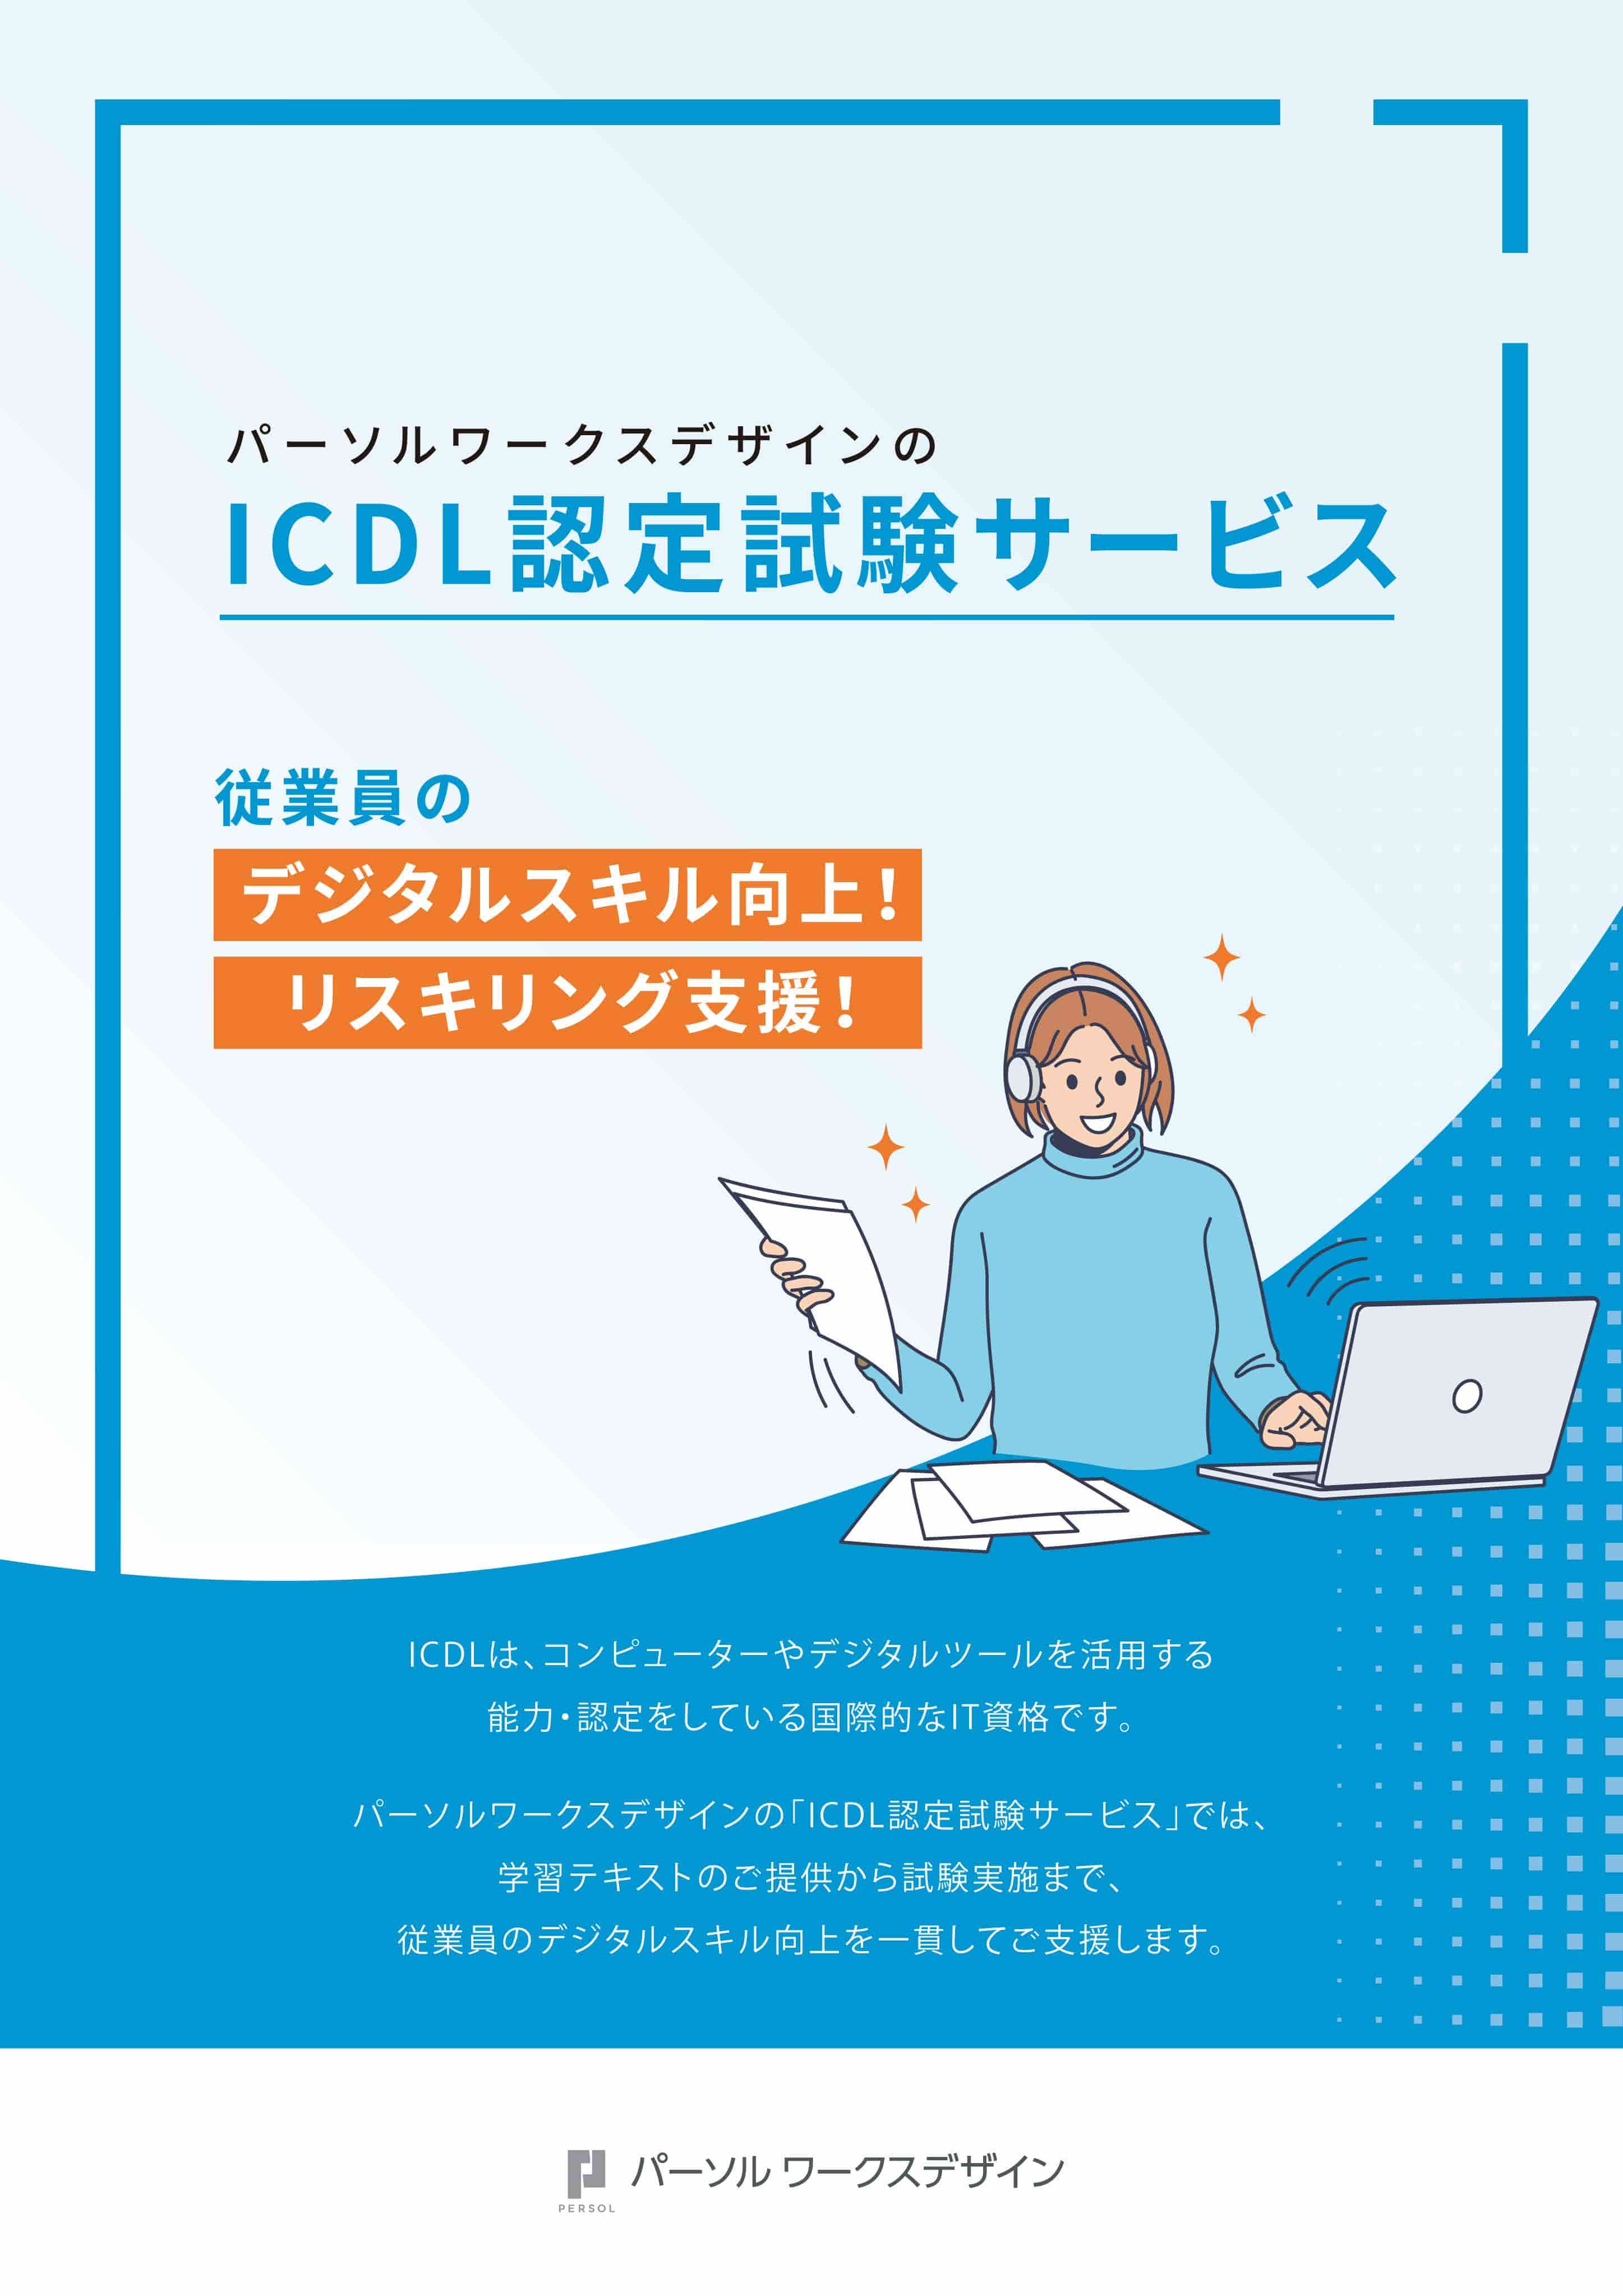 ICDL認定試験